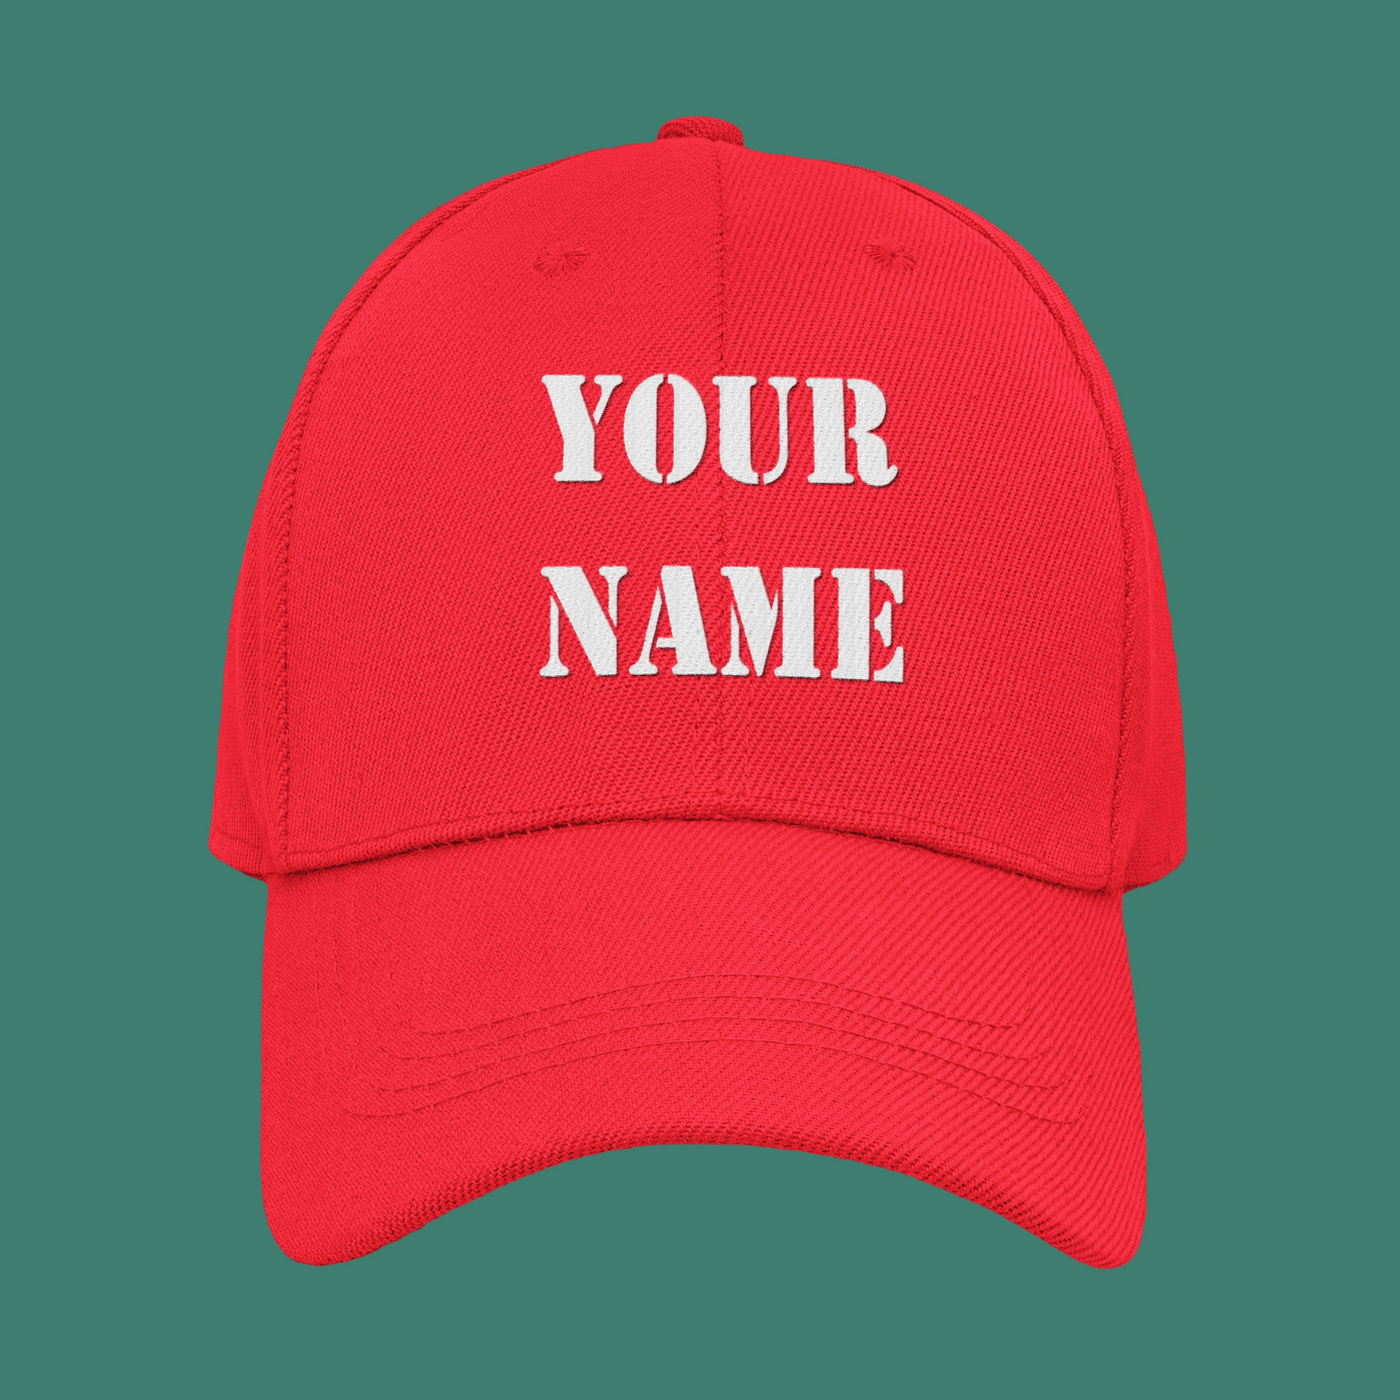 Customized Caps